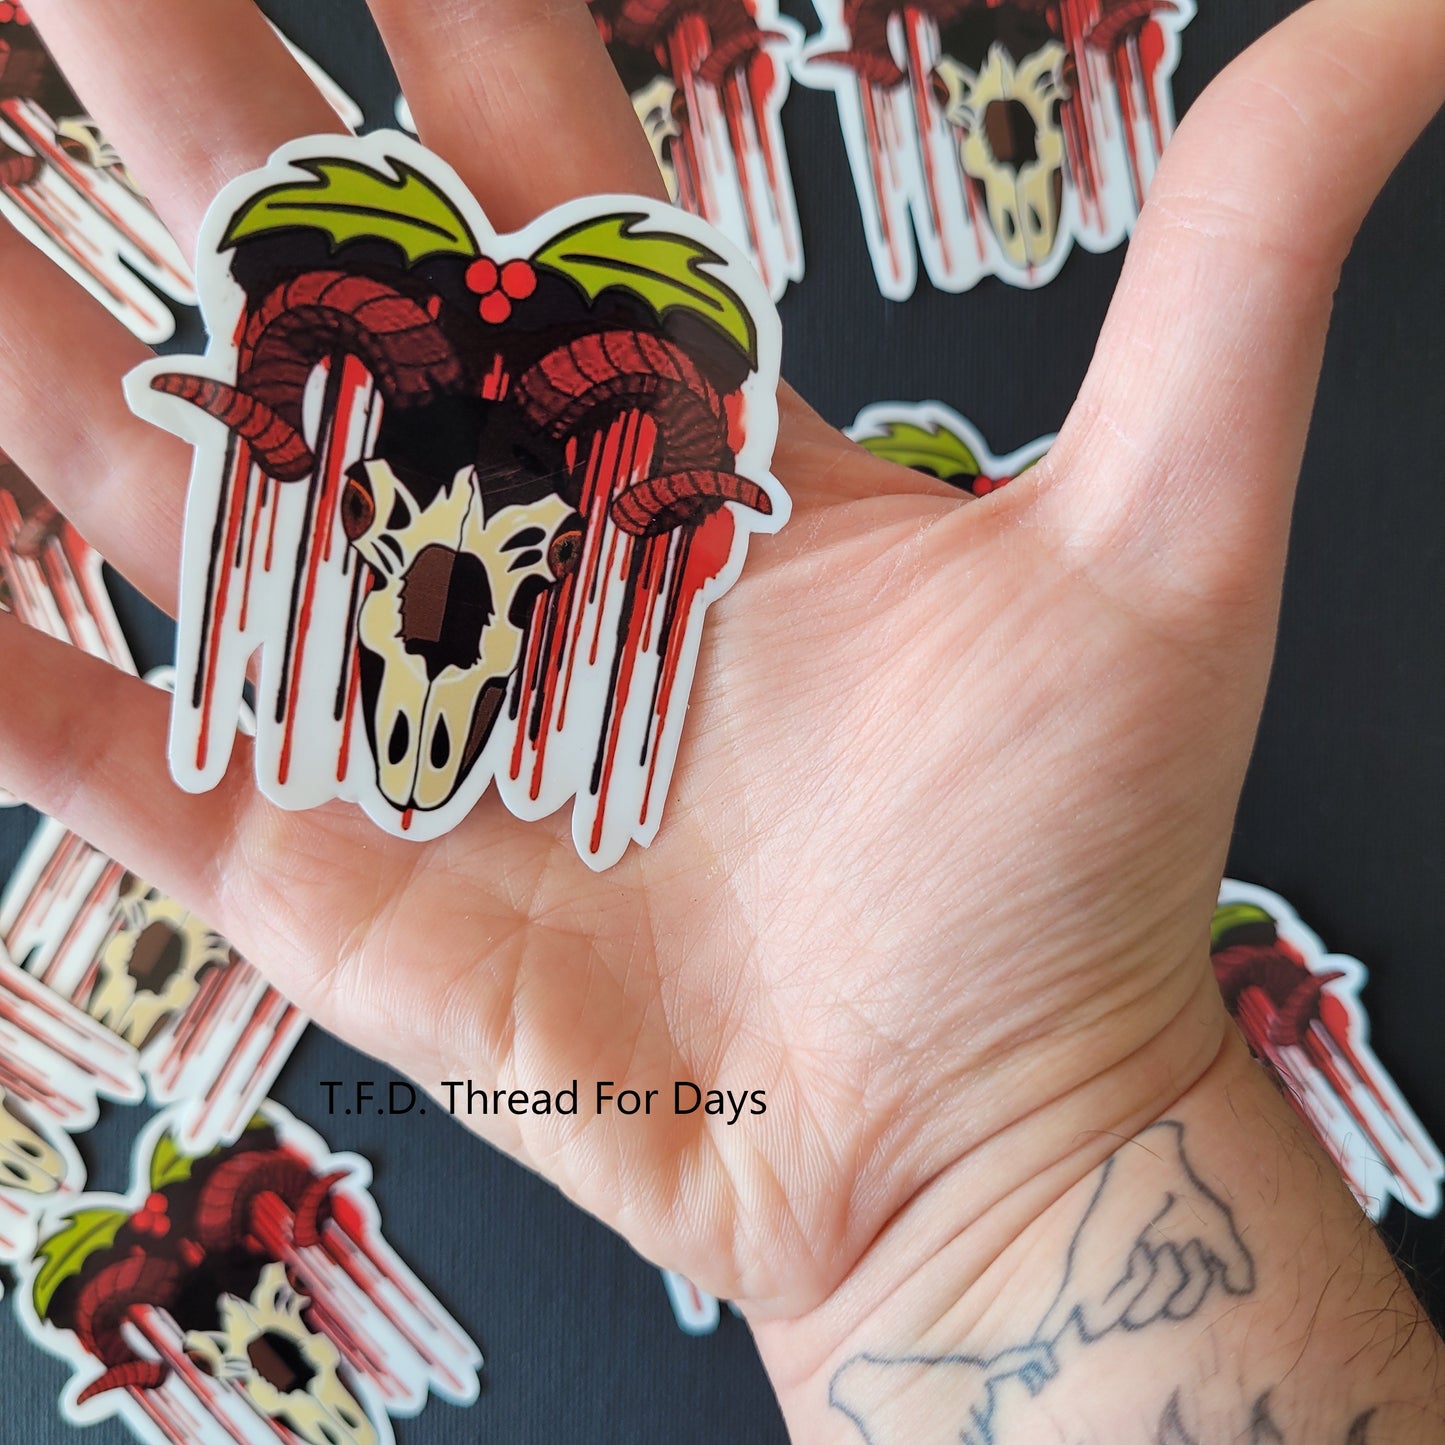 krampus sticker in palm of hand to demonstrate size